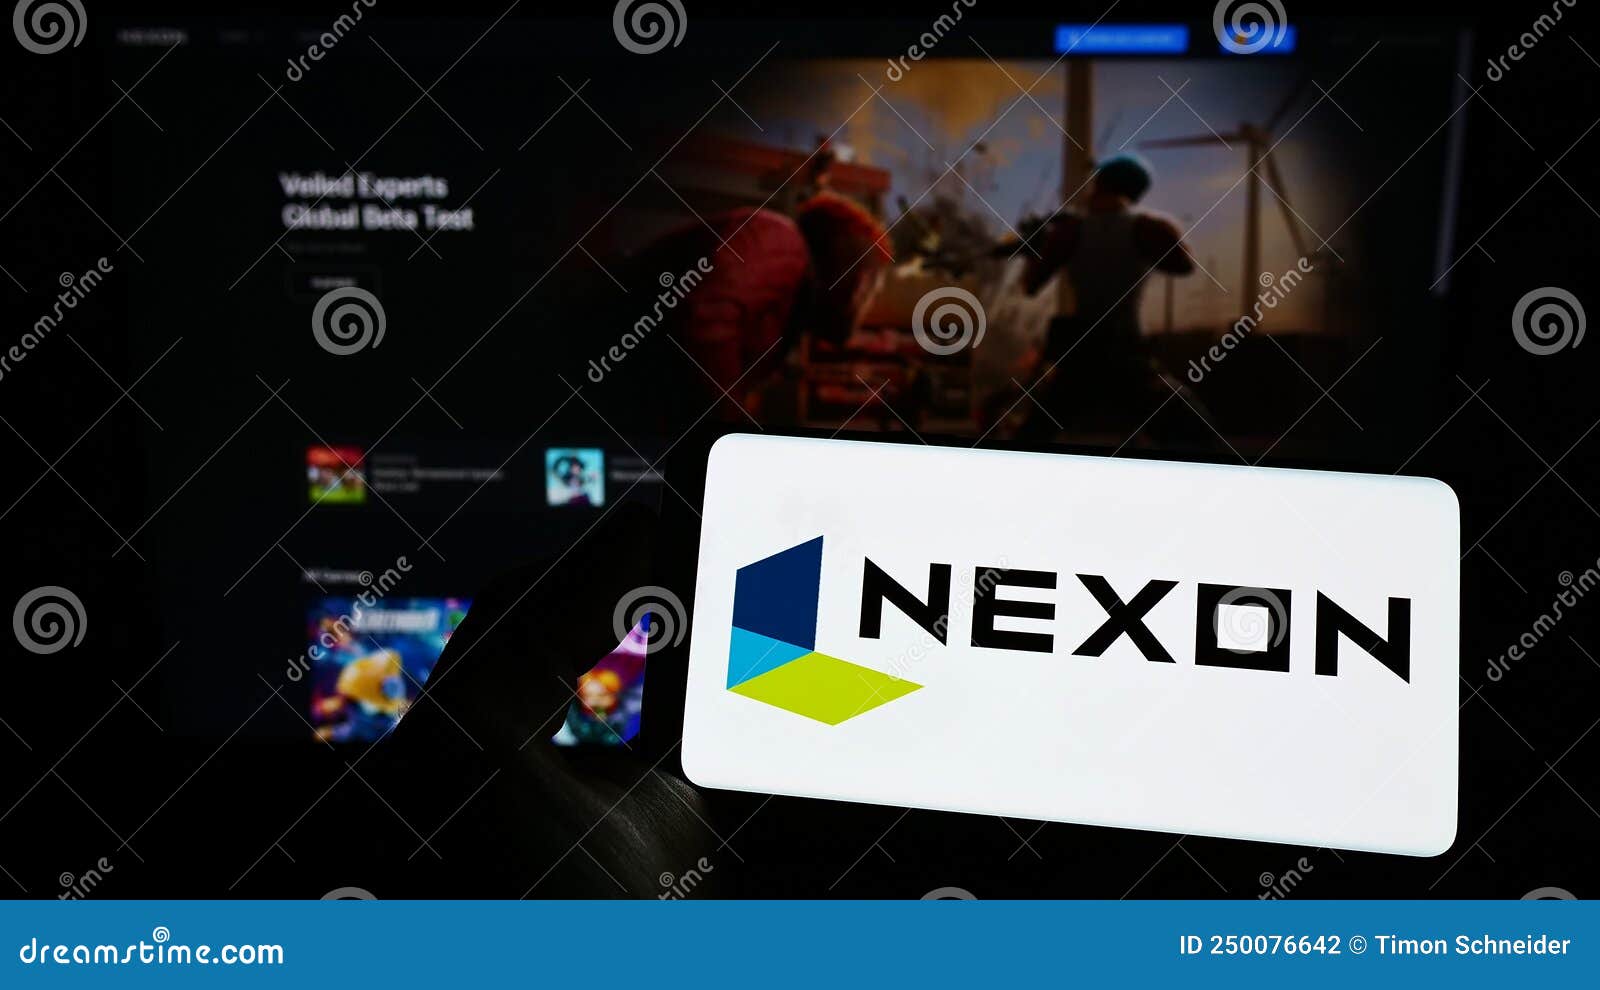 Korean Online Gaming Giant Nexon To Raise $1.3 Billion With IPO In Japan |  TechCrunch